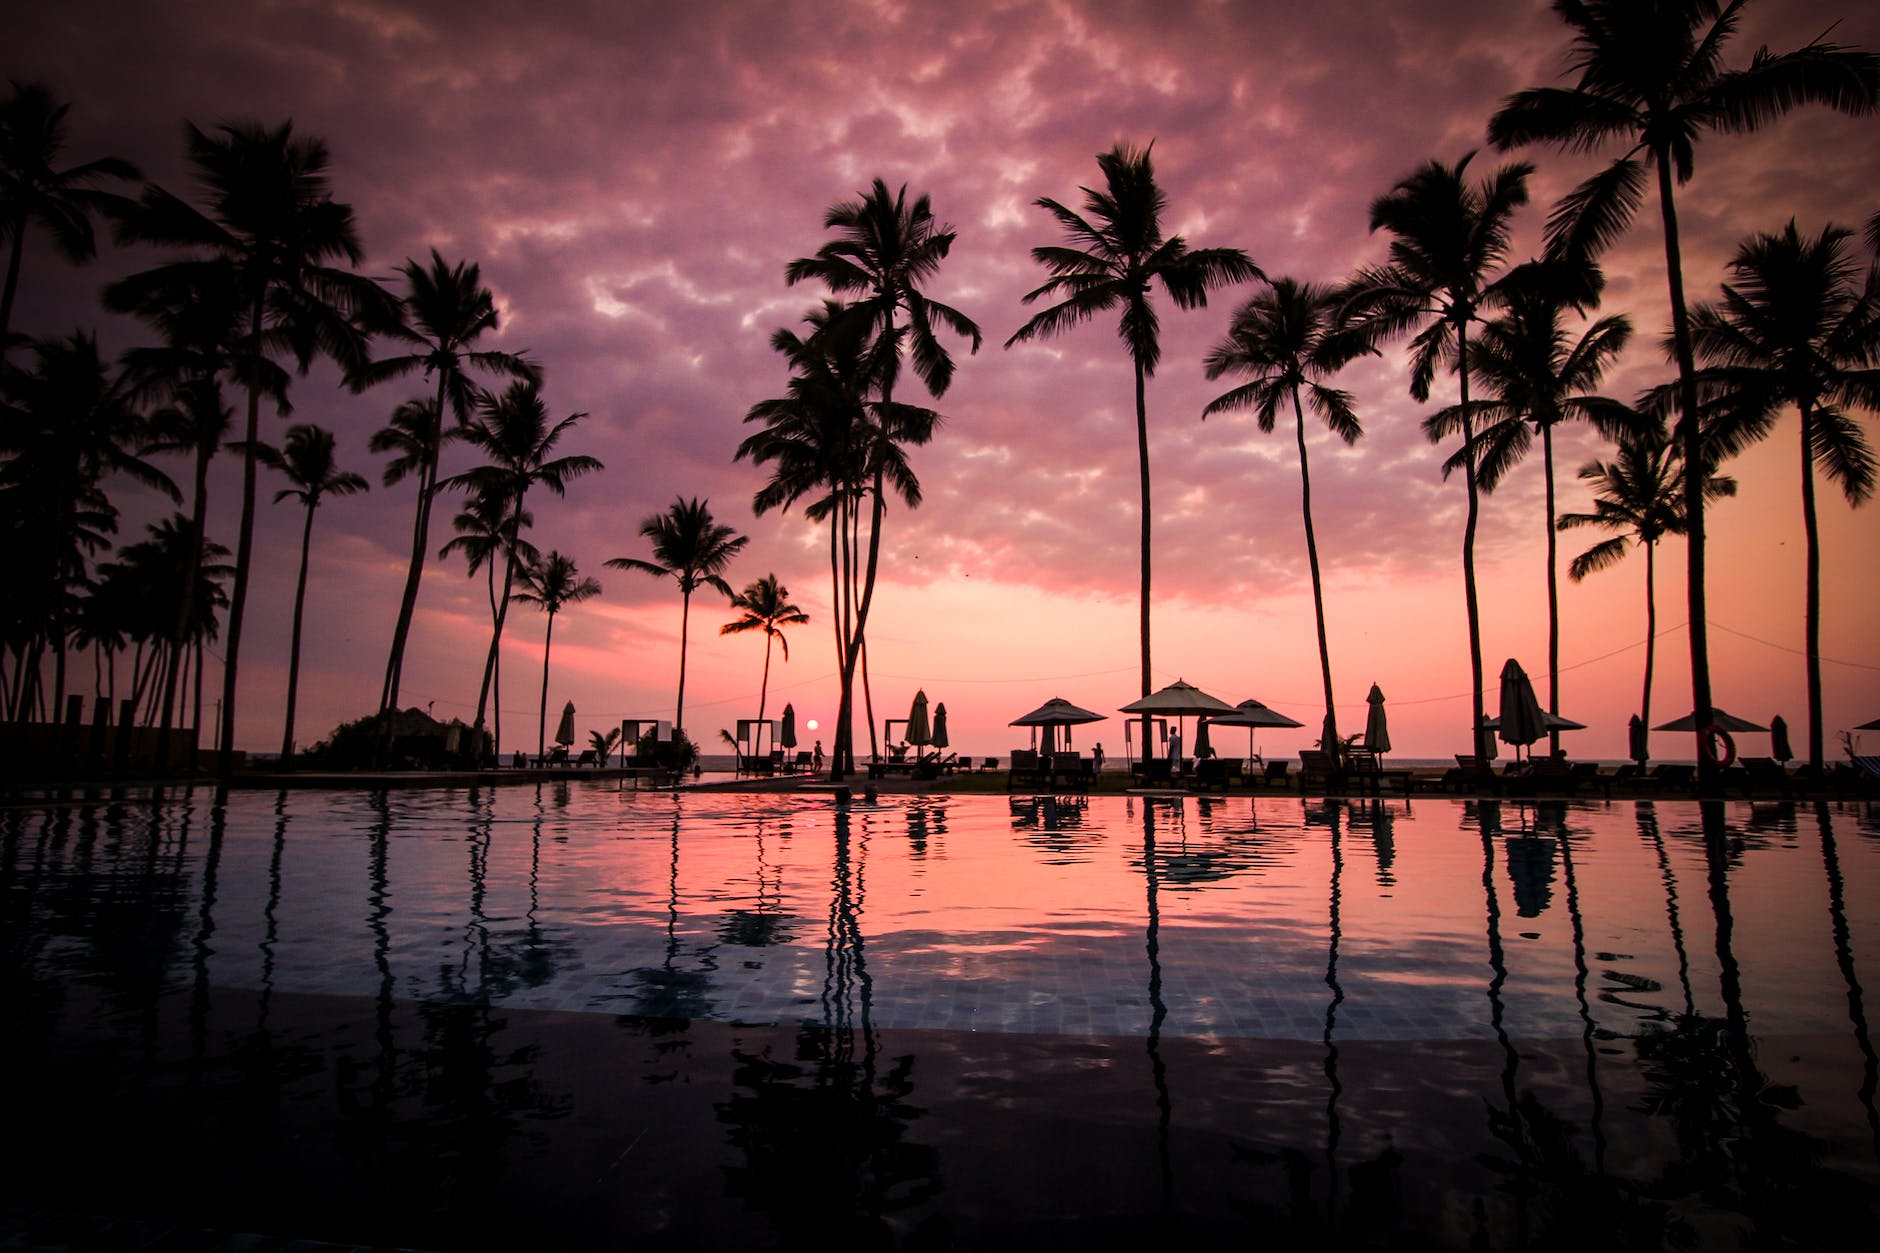 coconut palm tress beside calm lake silhouette